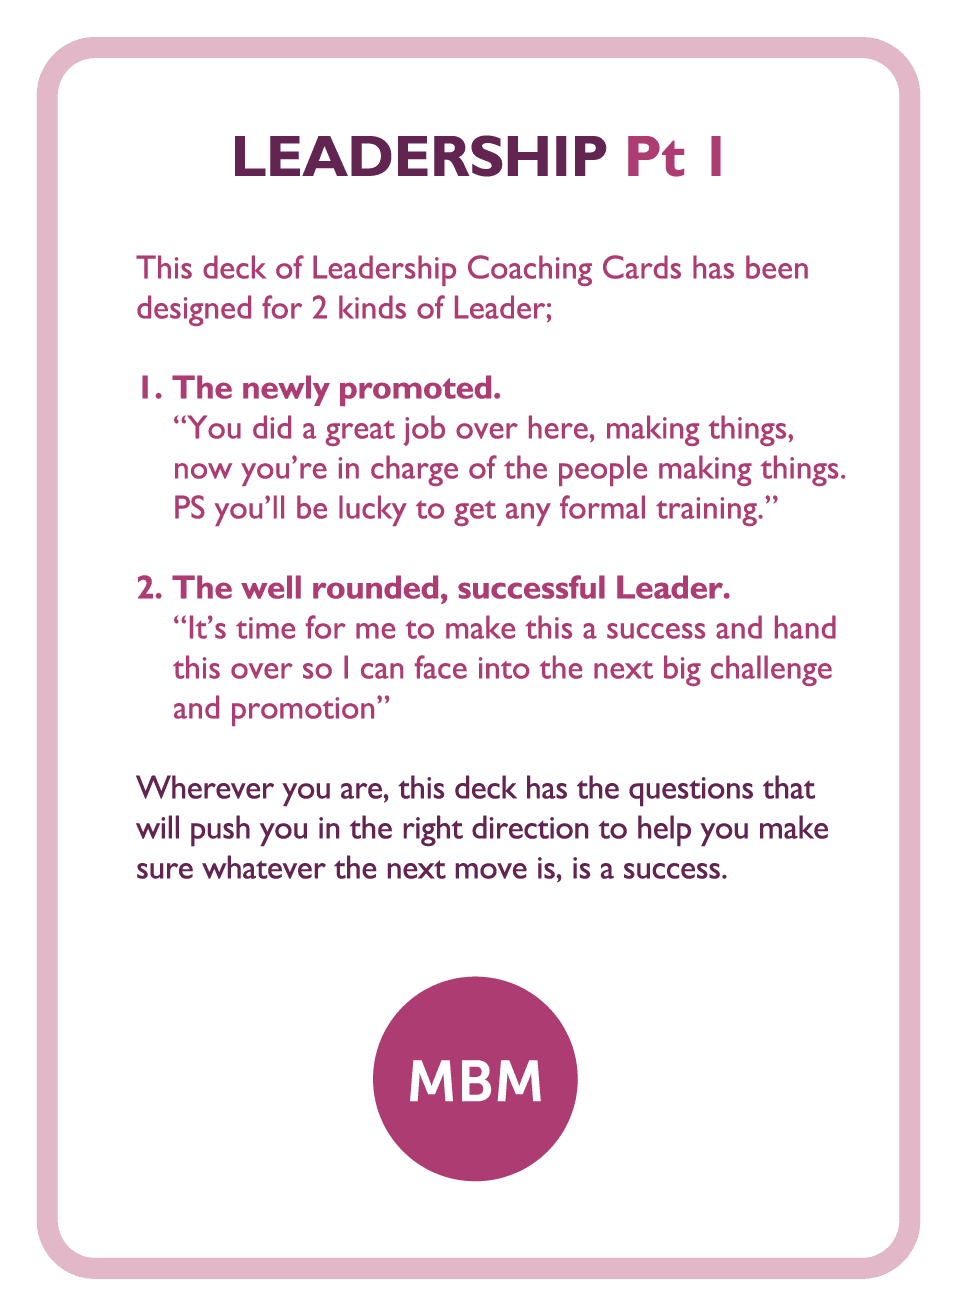 Coaching card titled Leadership Pt 1